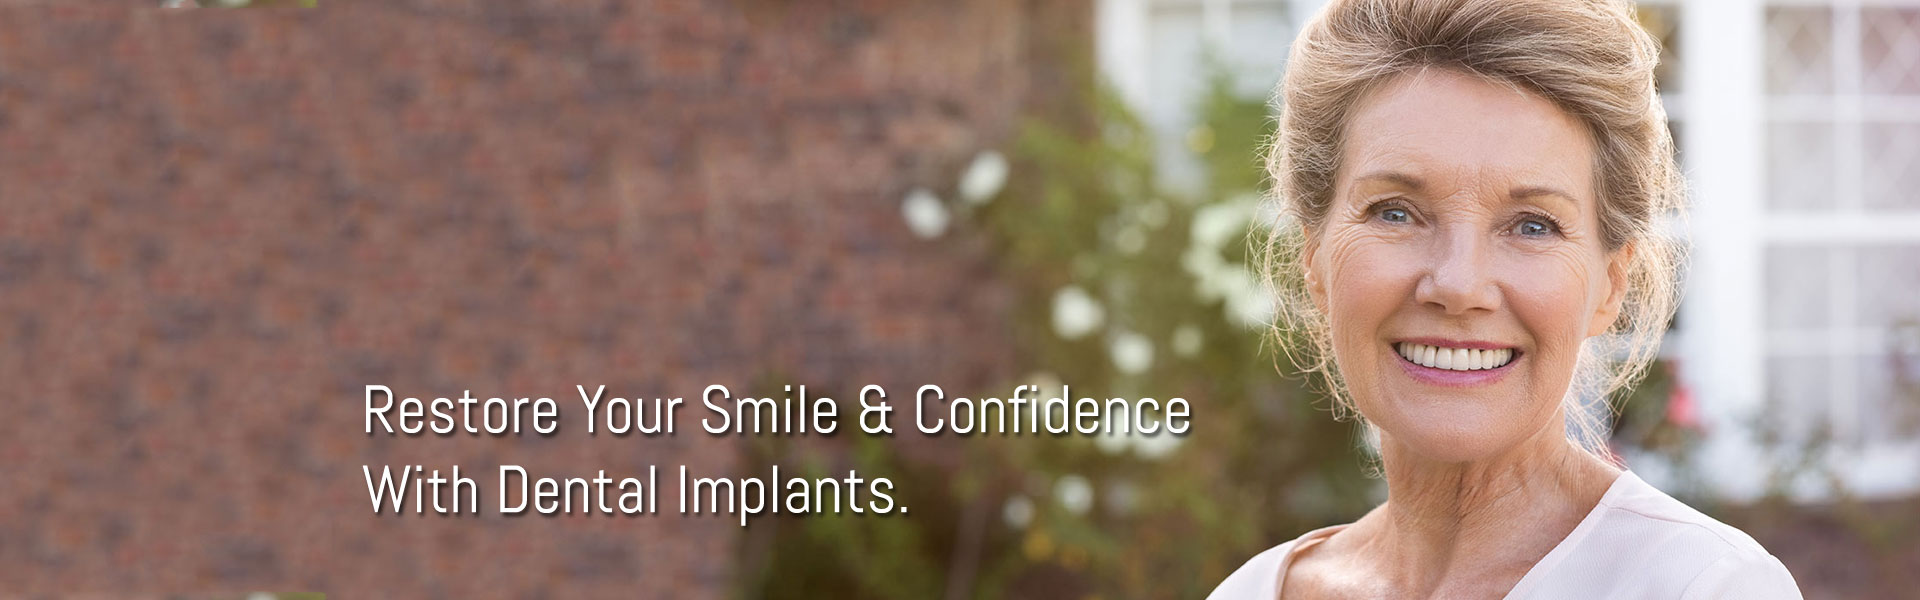 dental implants in orangeville